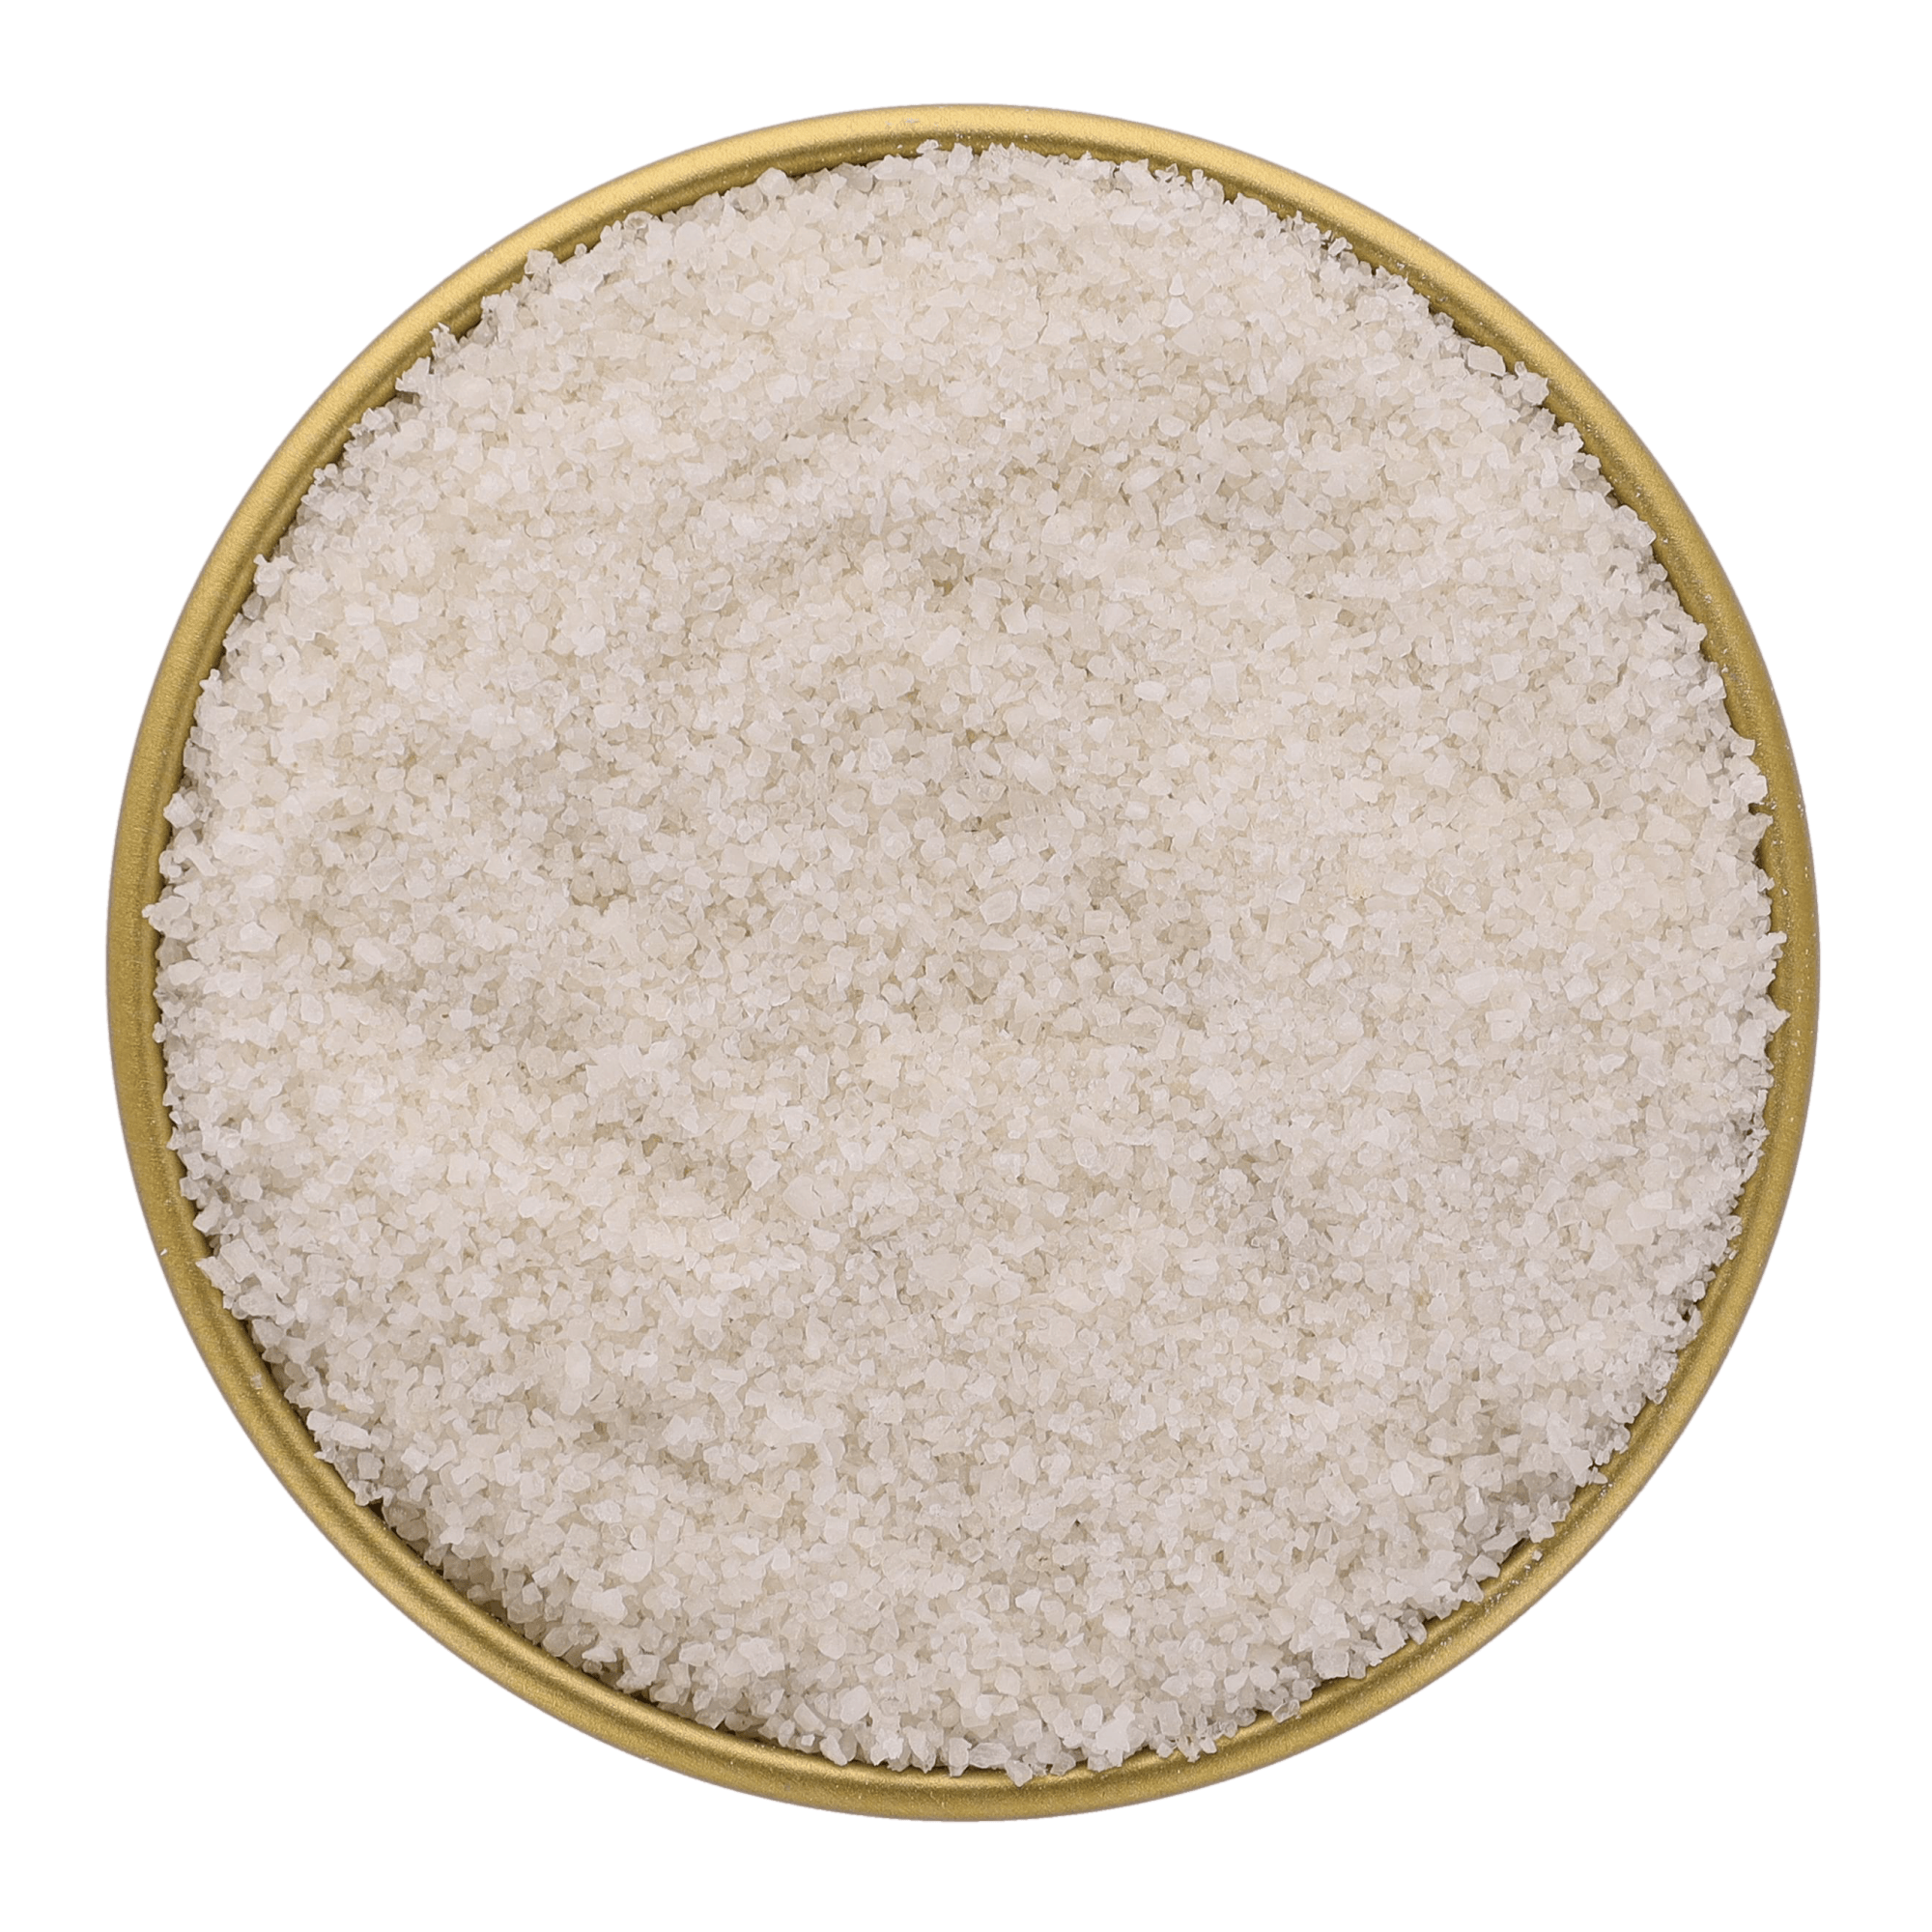 Fine Grey Sea Salt Guerande Label Rouge - Savory Gourmet